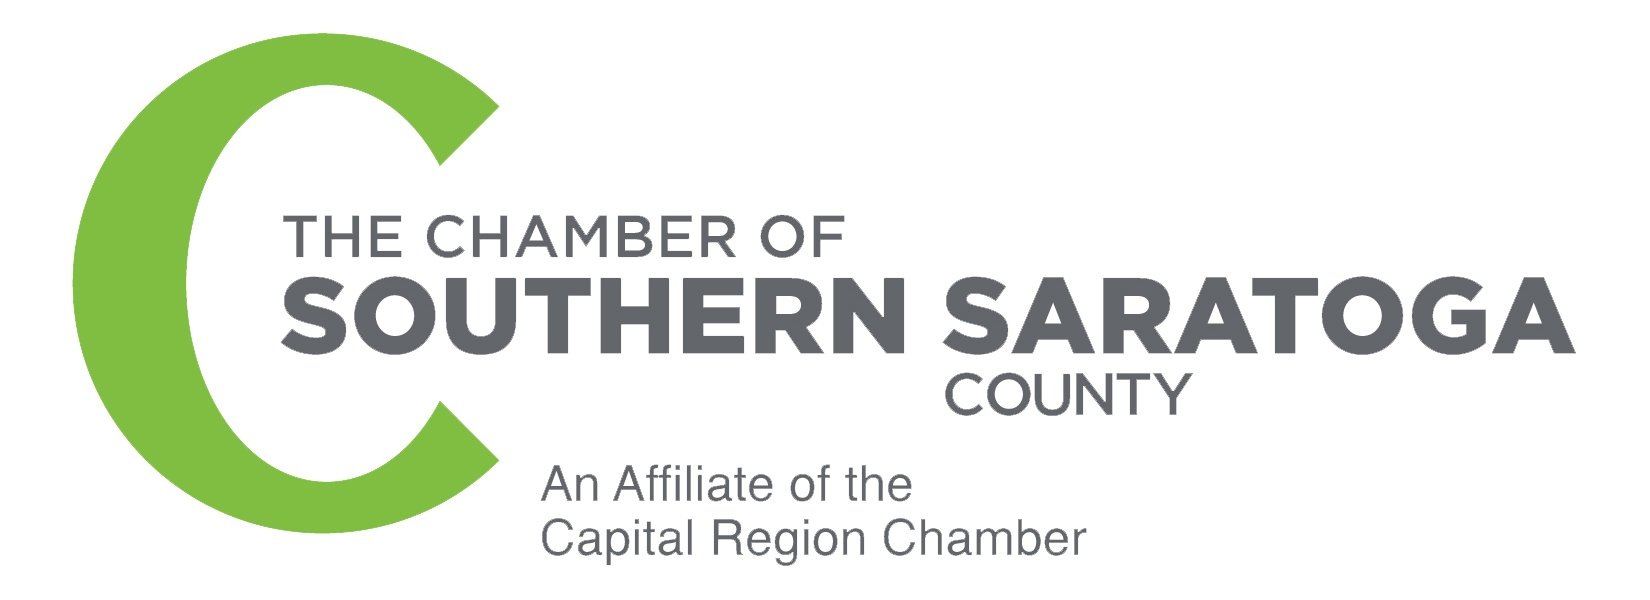 Southern Saratoga County Logo RGB.jpg